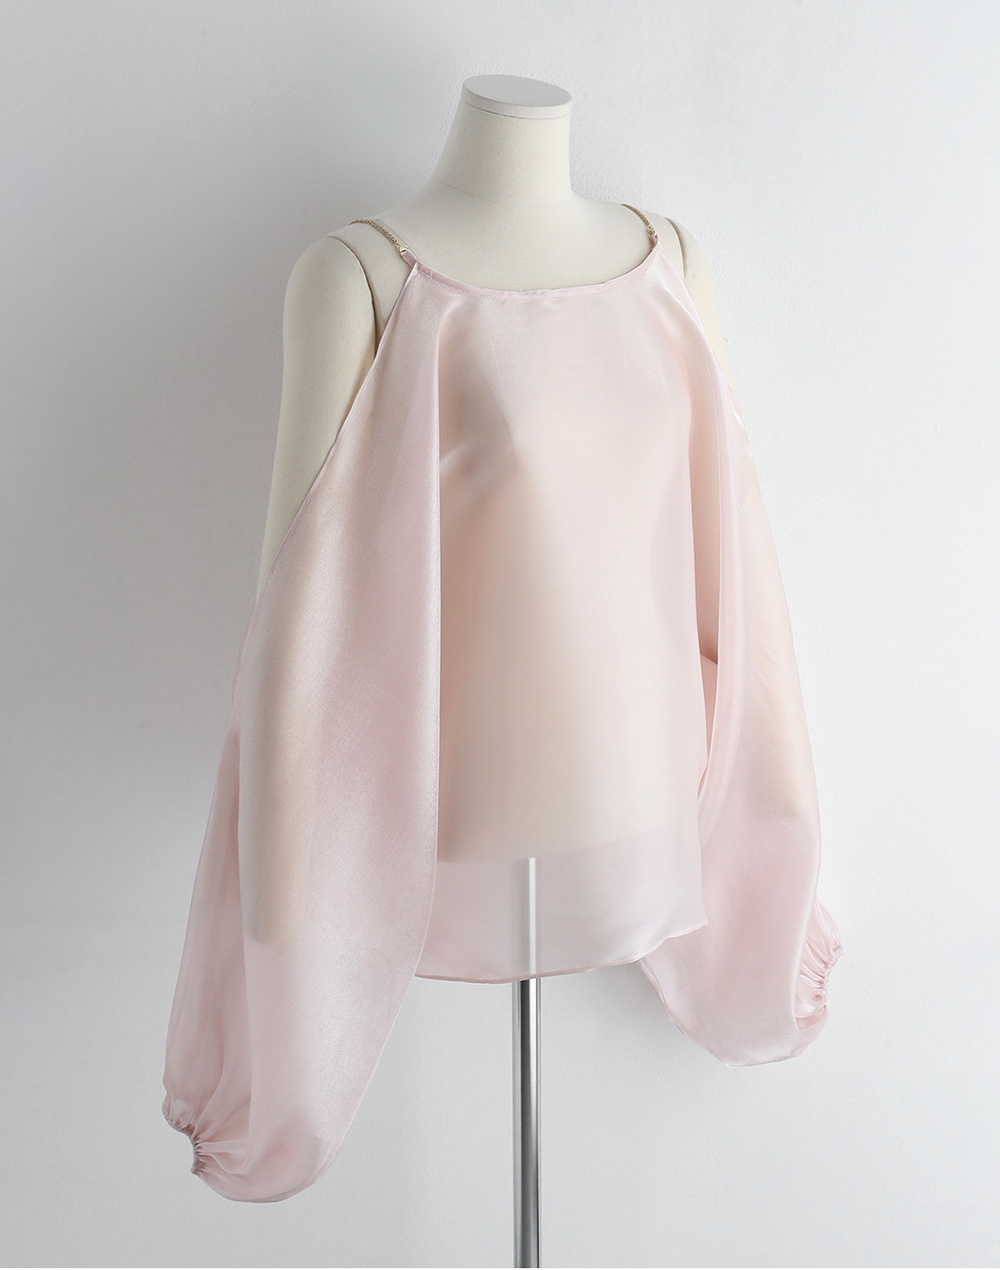 Glossy sheer blouse・a278762（ブラウス/ブラウス）| kinkinkin00 | 東京ガールズマーケット